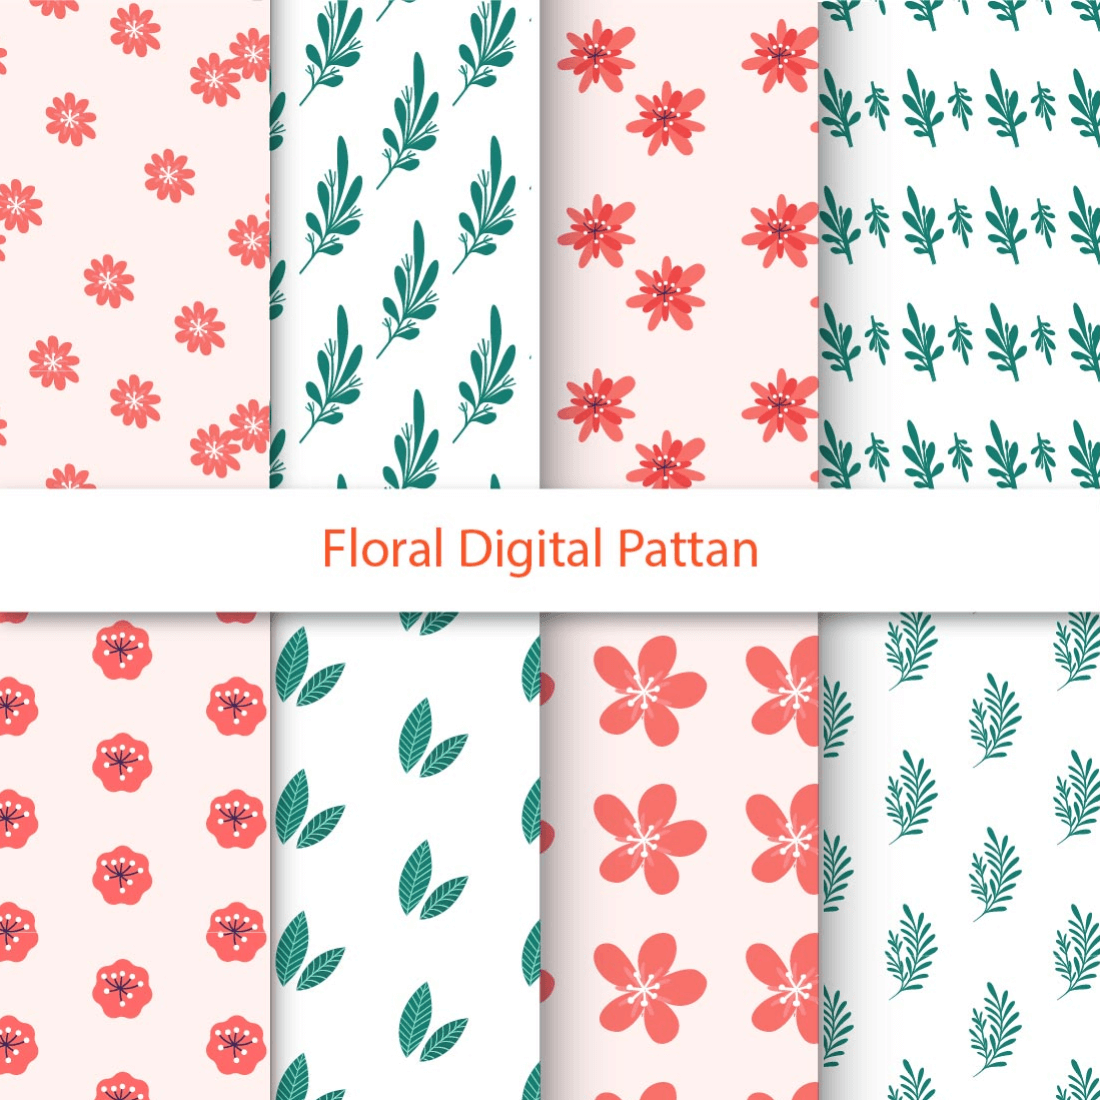 Floral Digital pattern preview image.